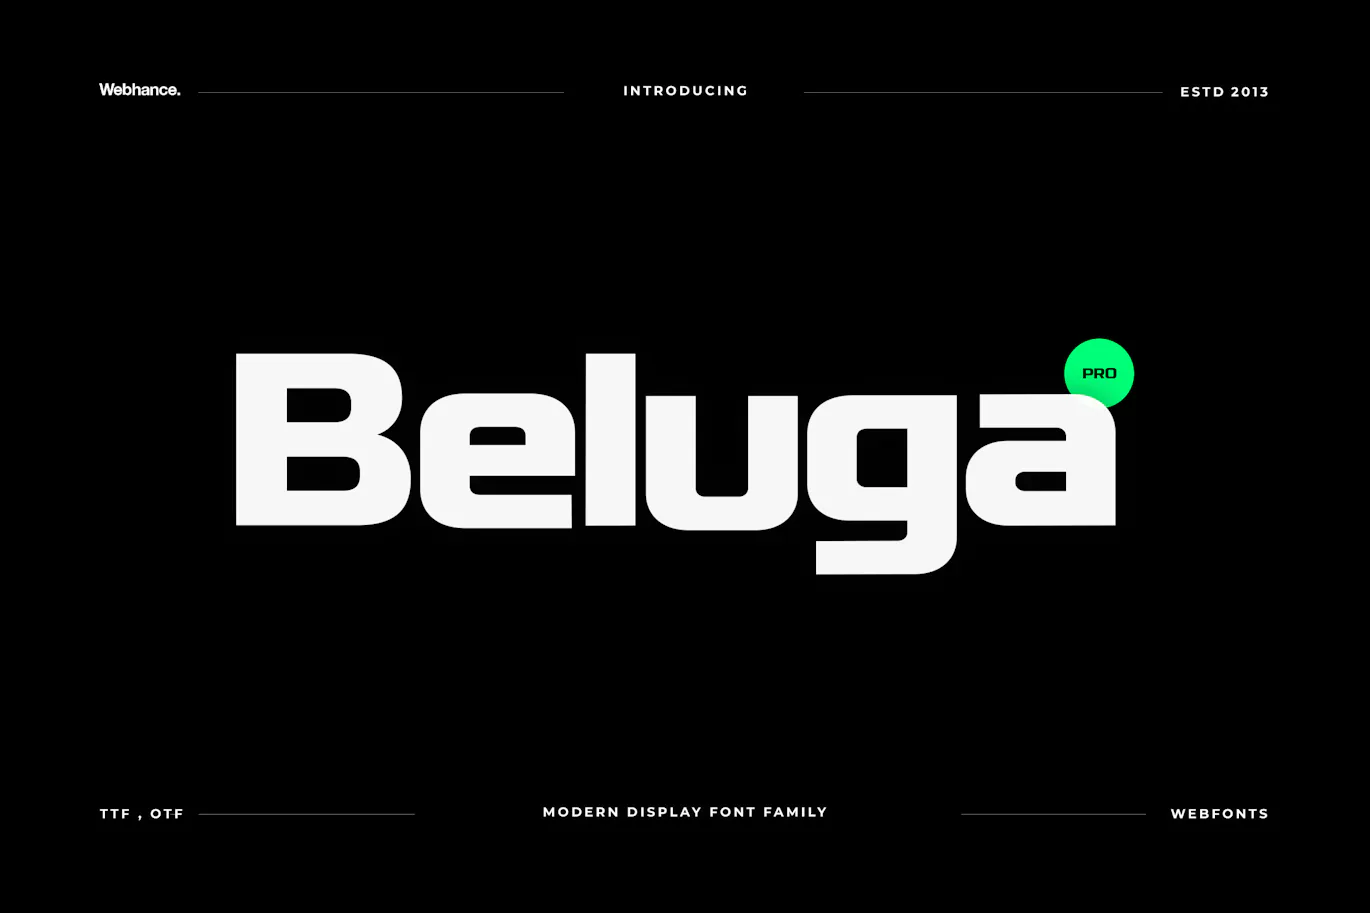 时尚简约的设计无衬线英文字体 Beluga - Modern Sans-Serif Font family